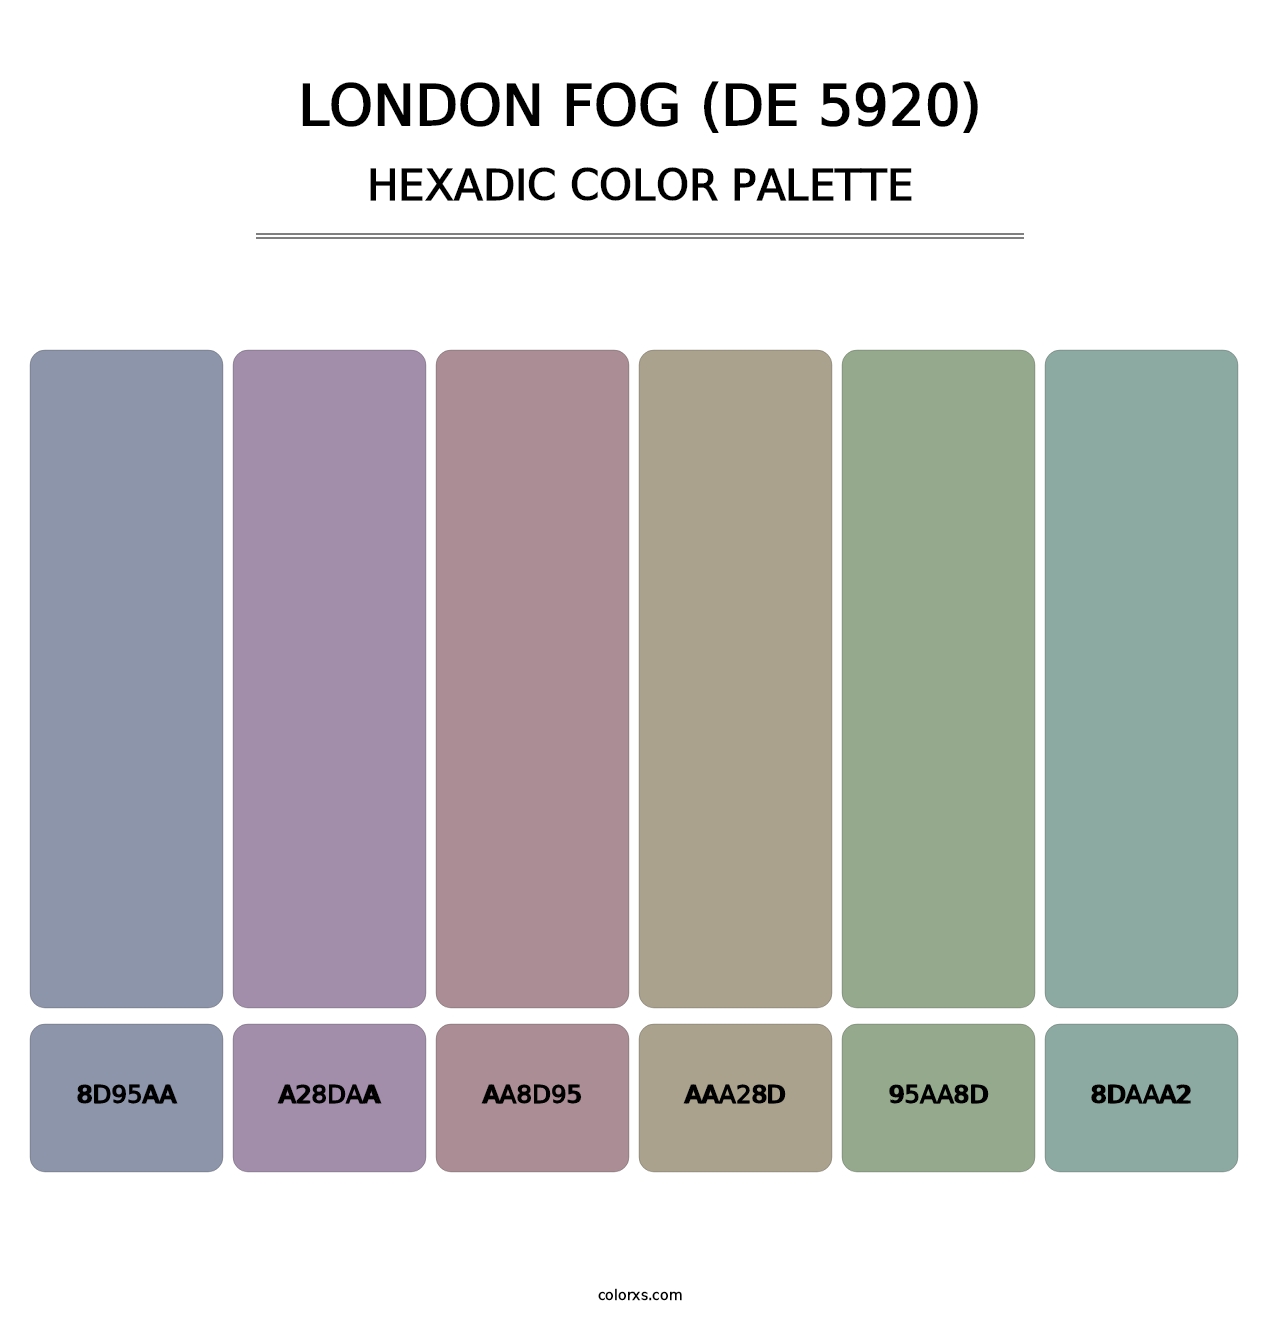 London Fog (DE 5920) - Hexadic Color Palette